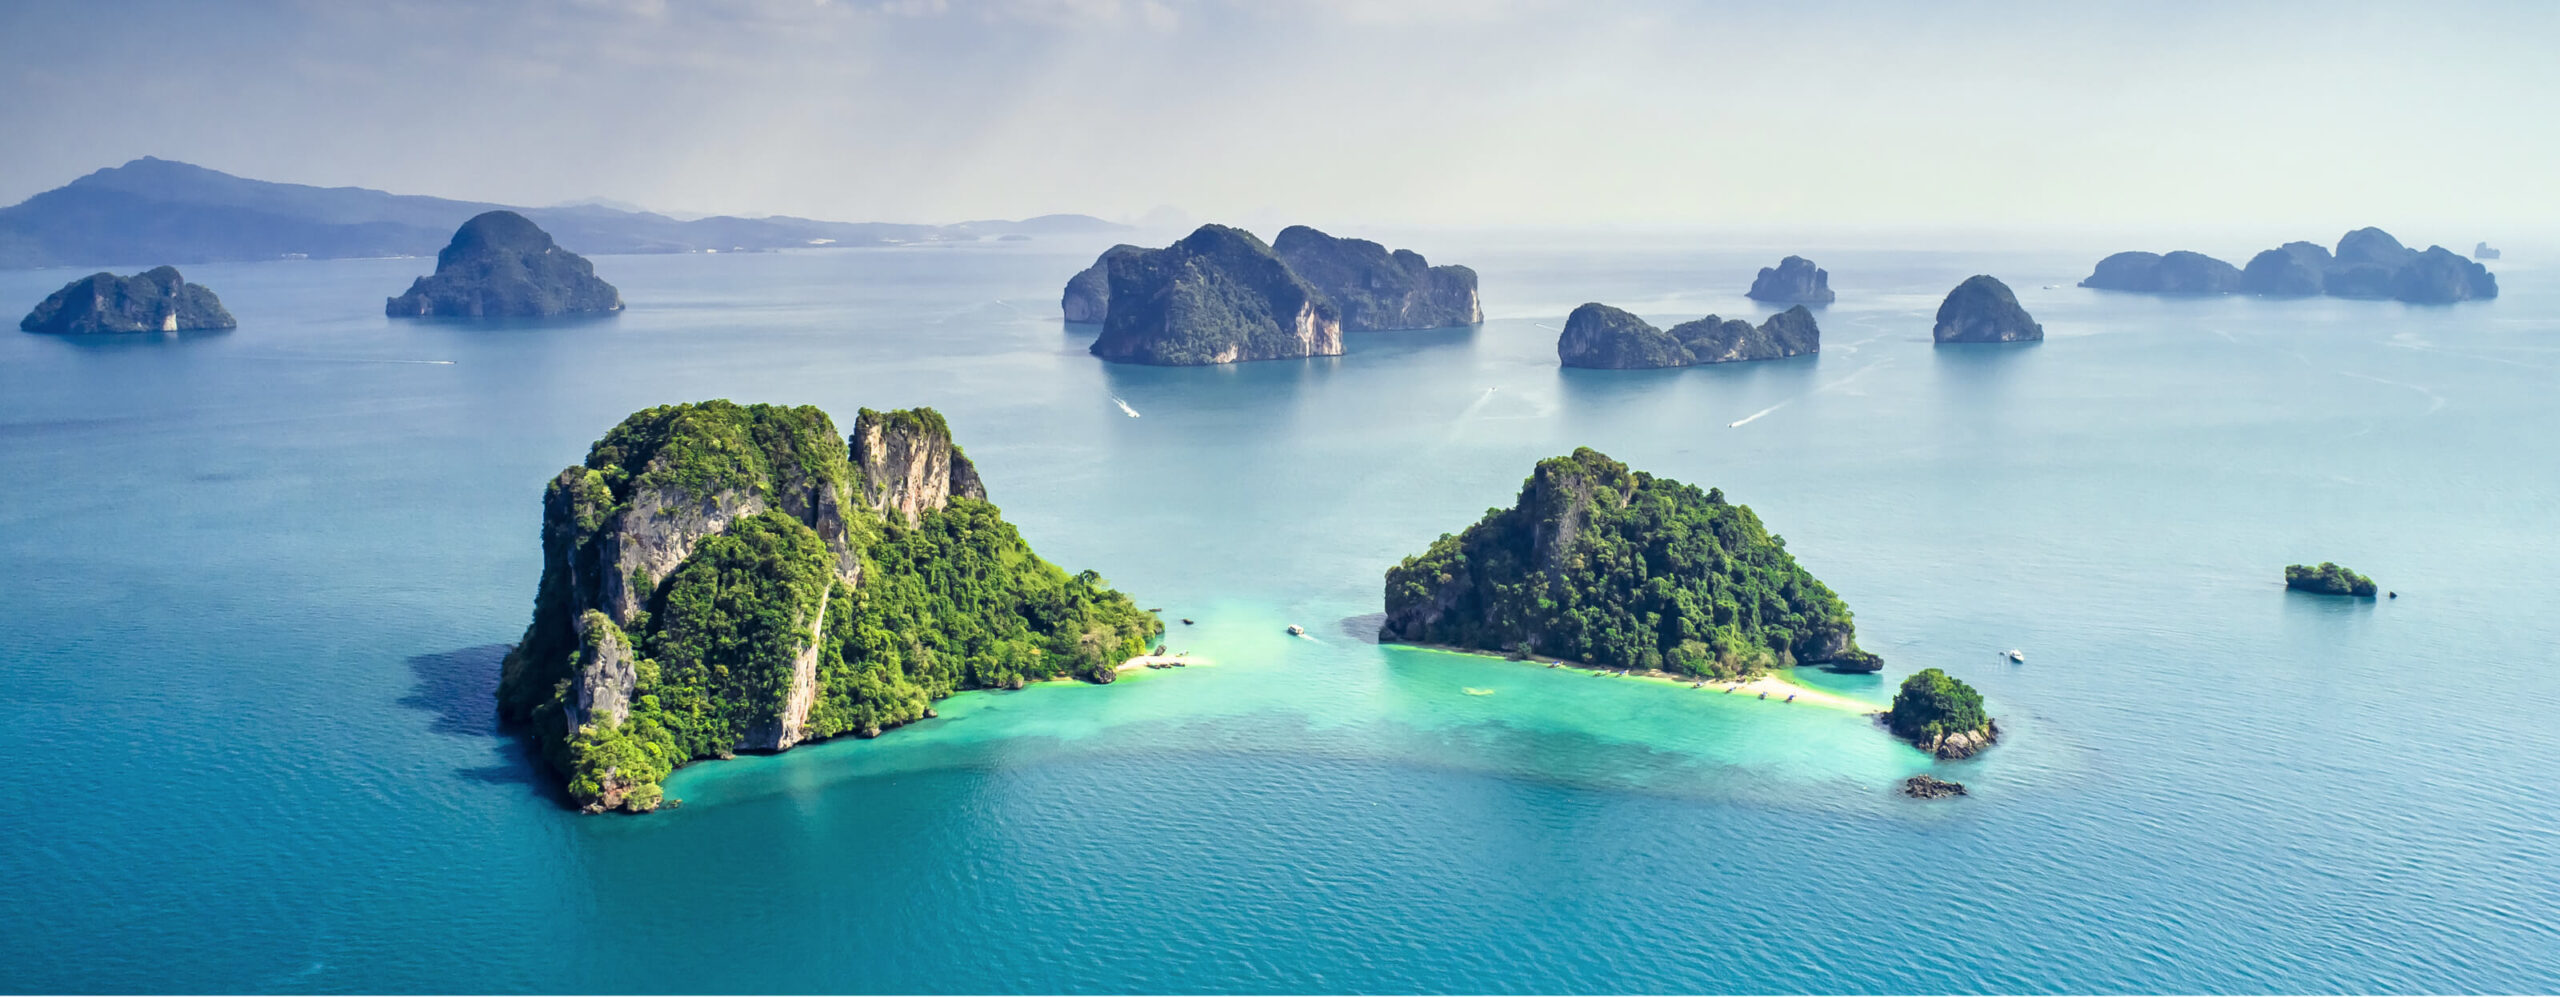 7 Top Thailand Honeymoon Destinations